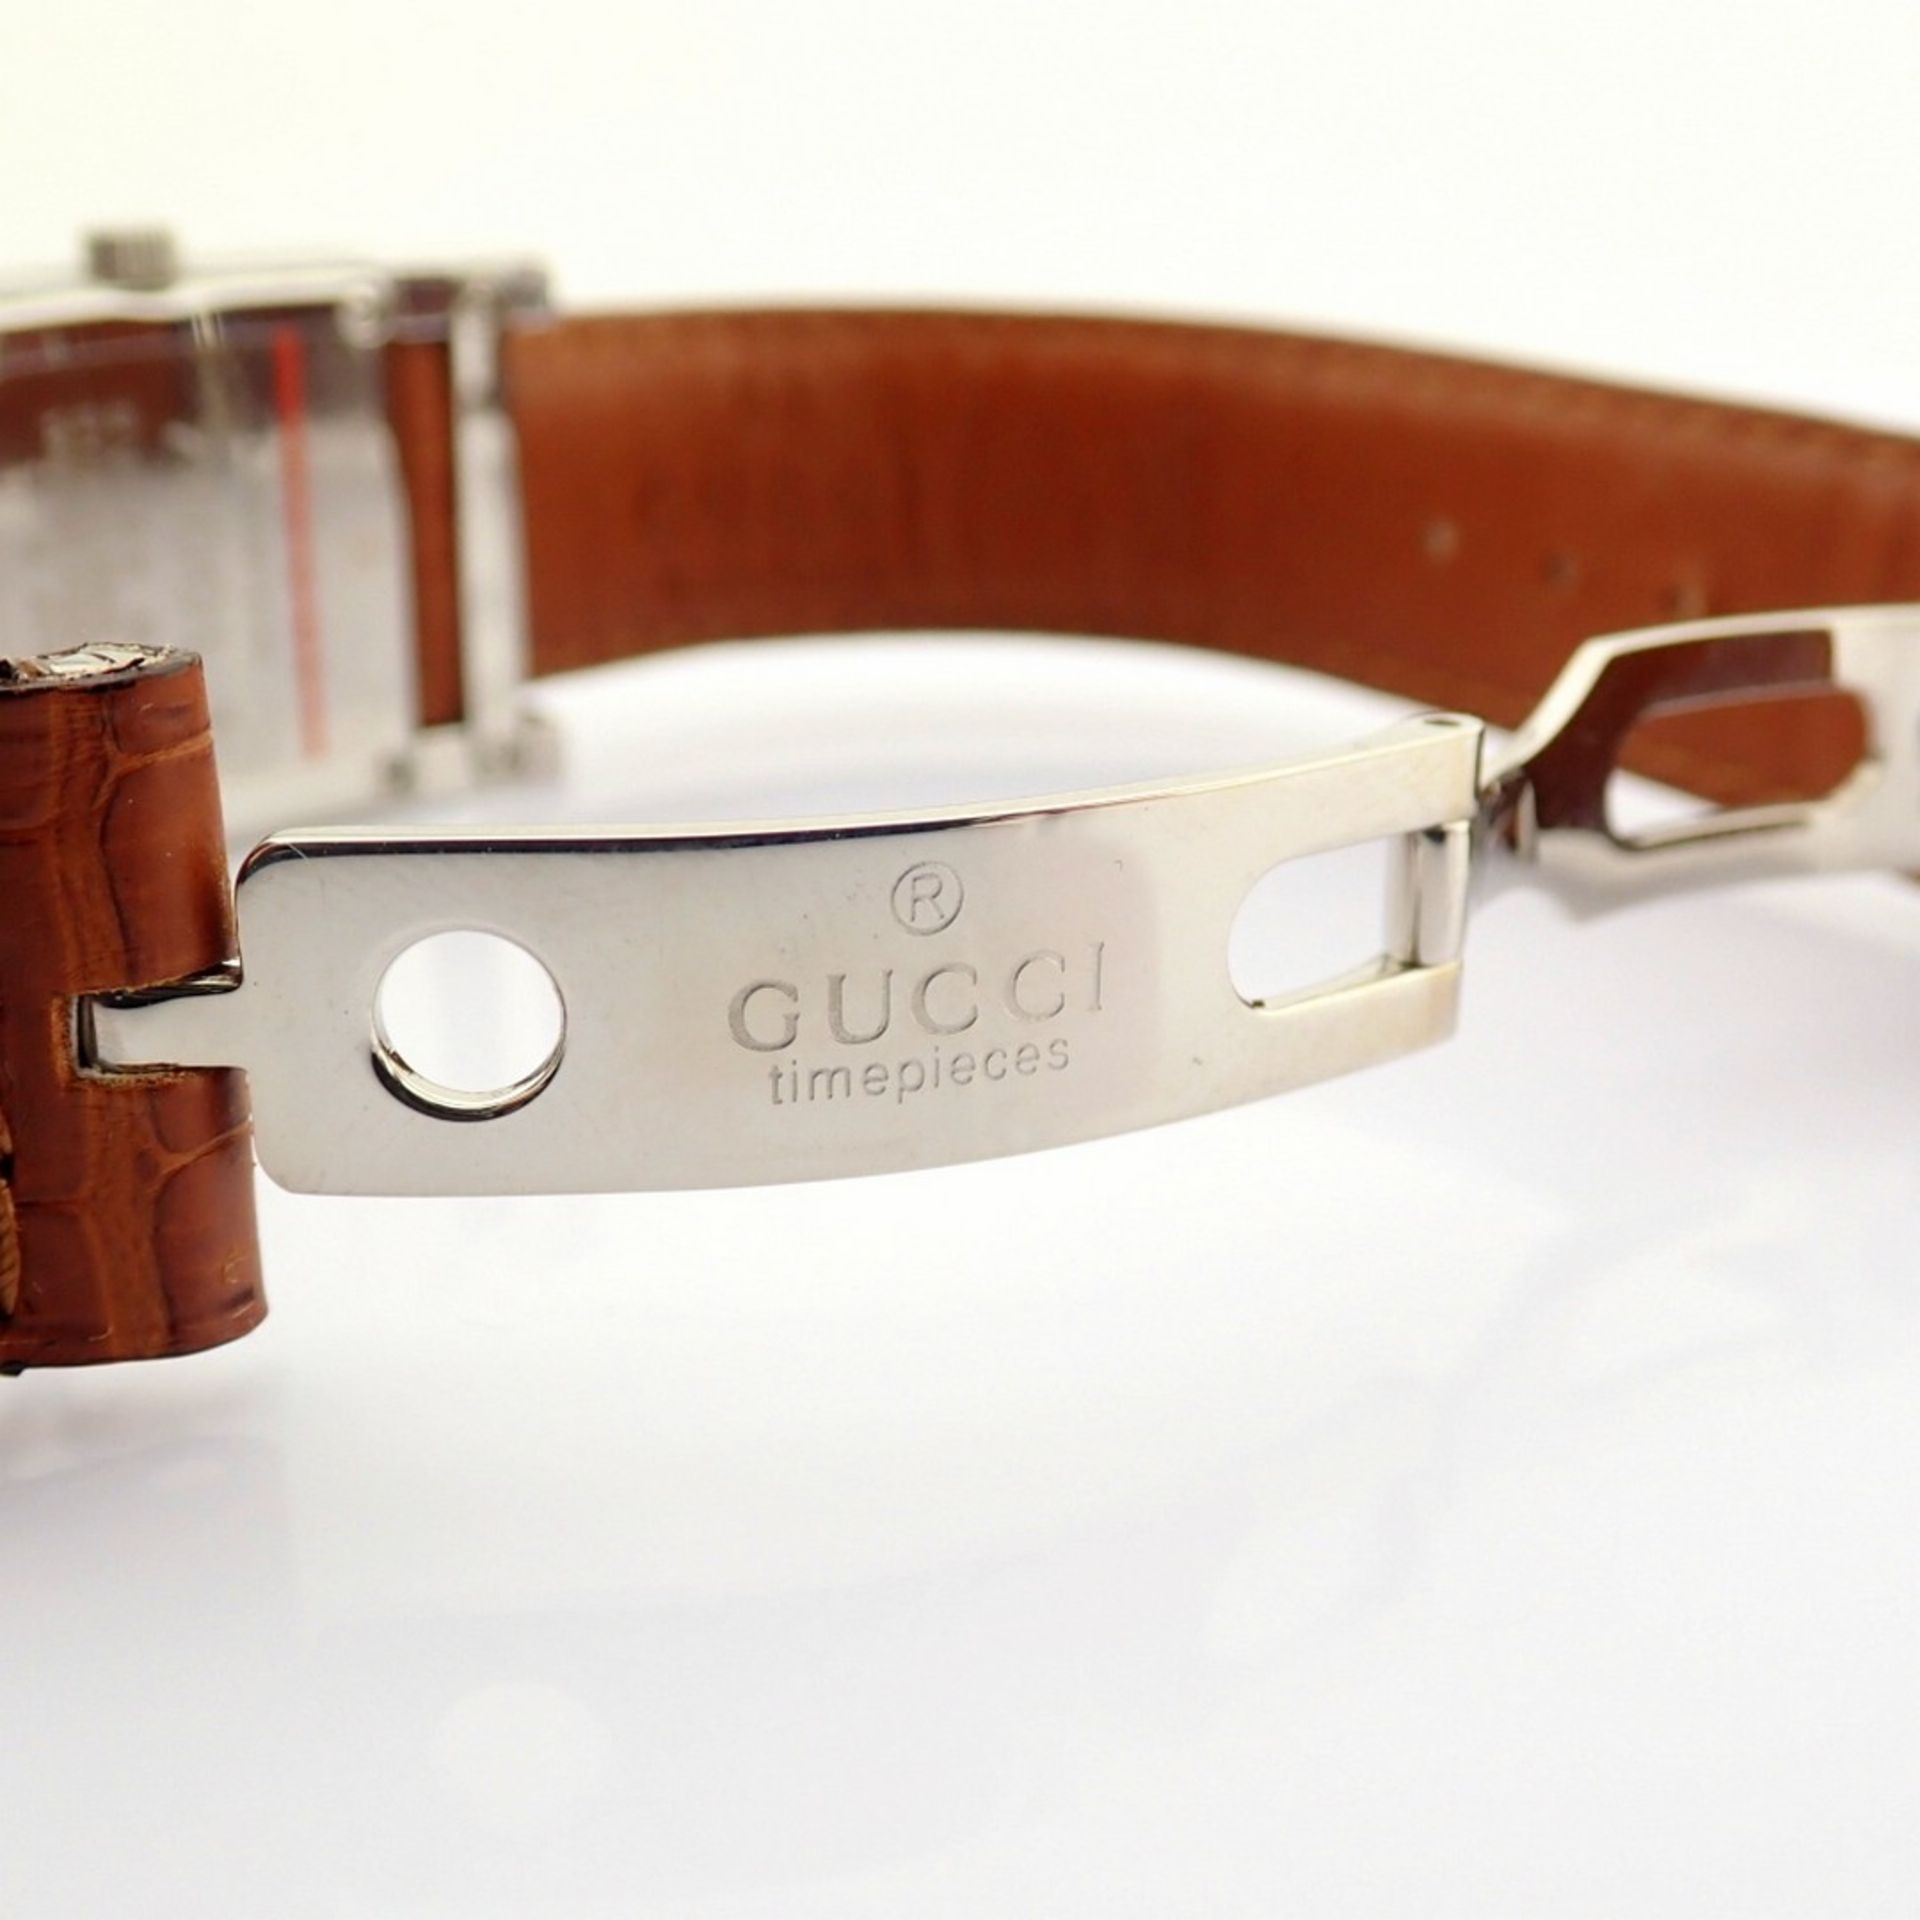 Gucci / 7900L.1 - (Unworn) Unisex Steel Wrist Watch - Image 5 of 7